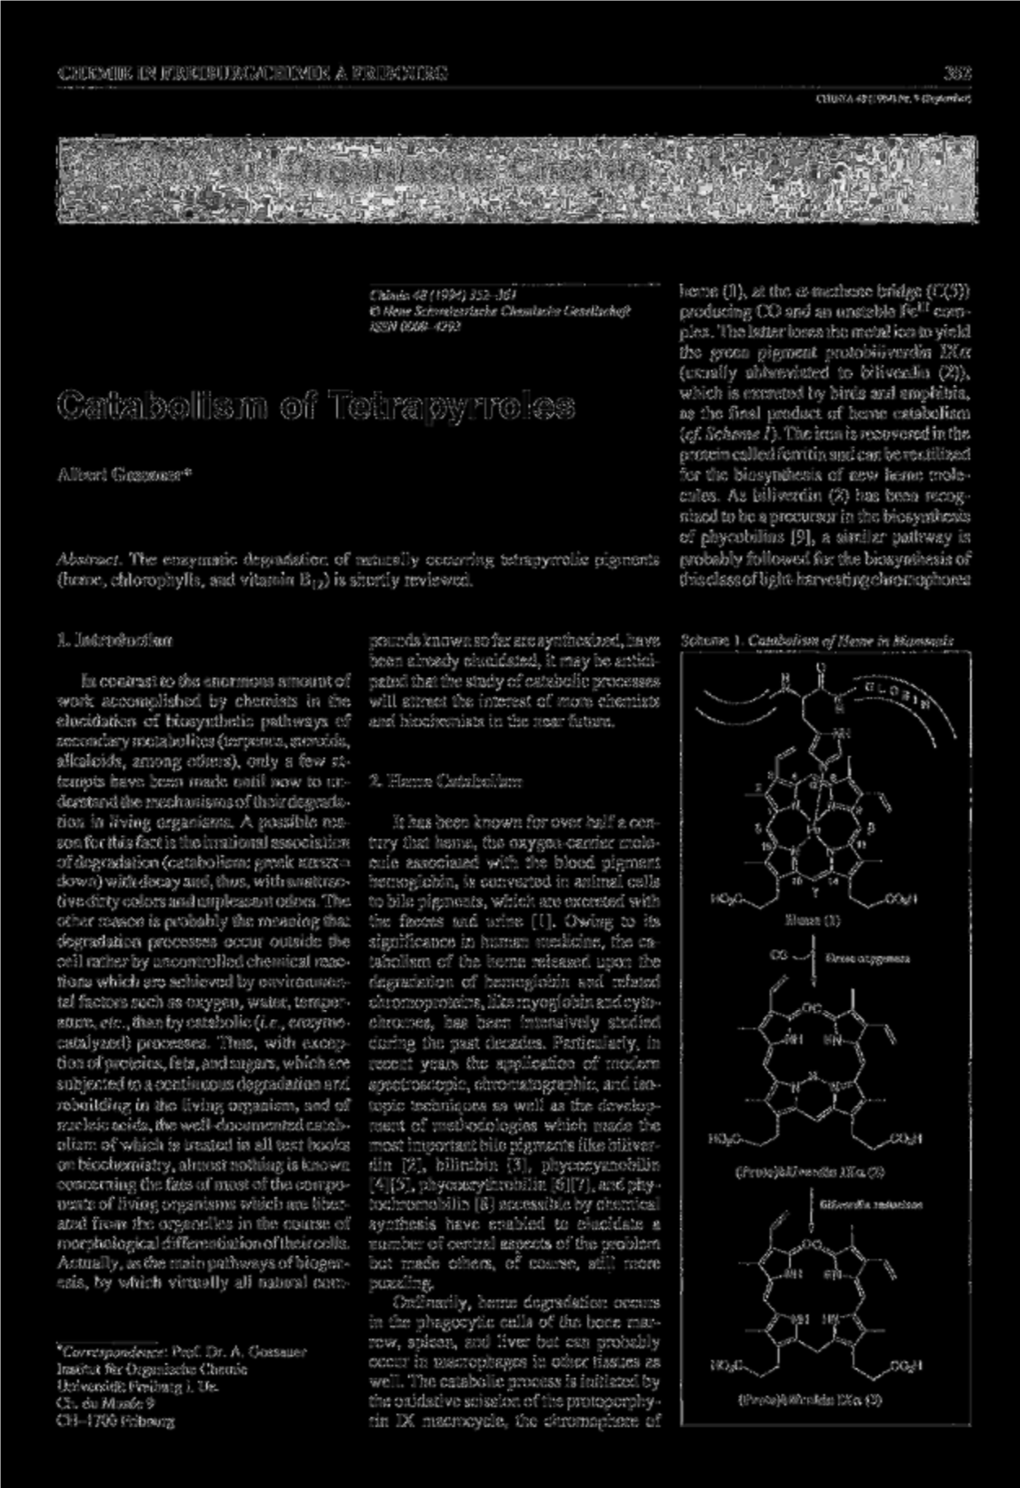 Catabolism of Tetrapyrroles As the Final Product of Heme Catabolism (Cf Scheme 1)